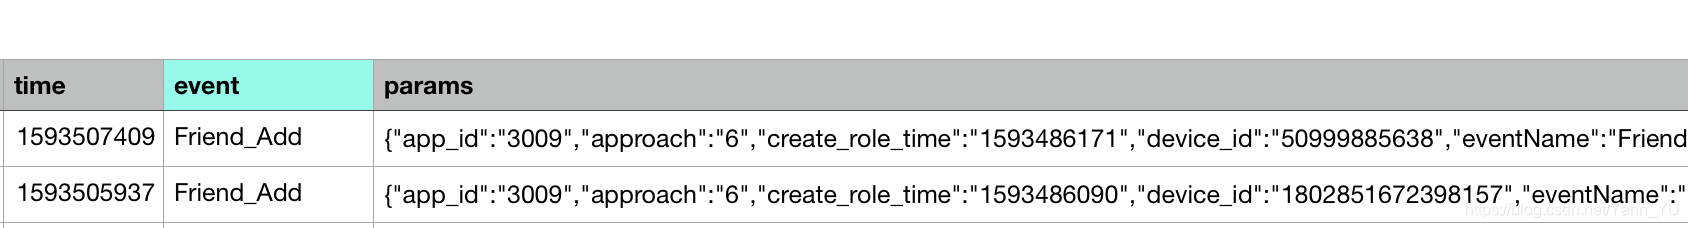 time以及event列都是常见的数据格式，但 params 列是JSON格式